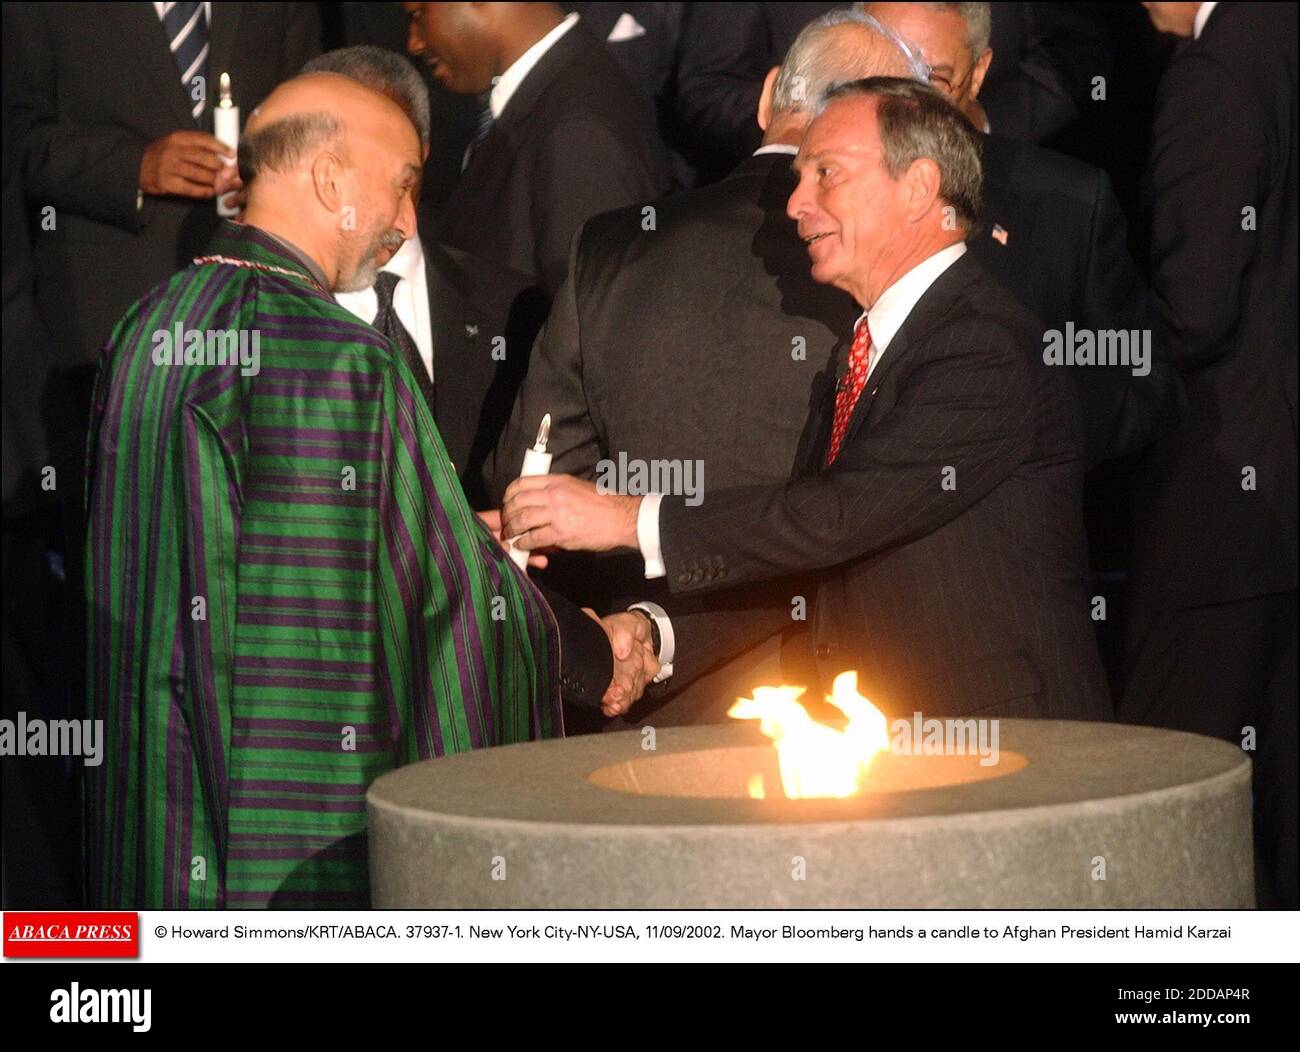 NO FILM, NO VIDEO, NO TV, NO DOCUMENTARY - © Howard Simmons/KRT/ABACA. 37937-1. New York City-NY-USA, 11/09/2002. Mayor Bloomberg hands a candle to Afghan President Hamid Karzai Stock Photo